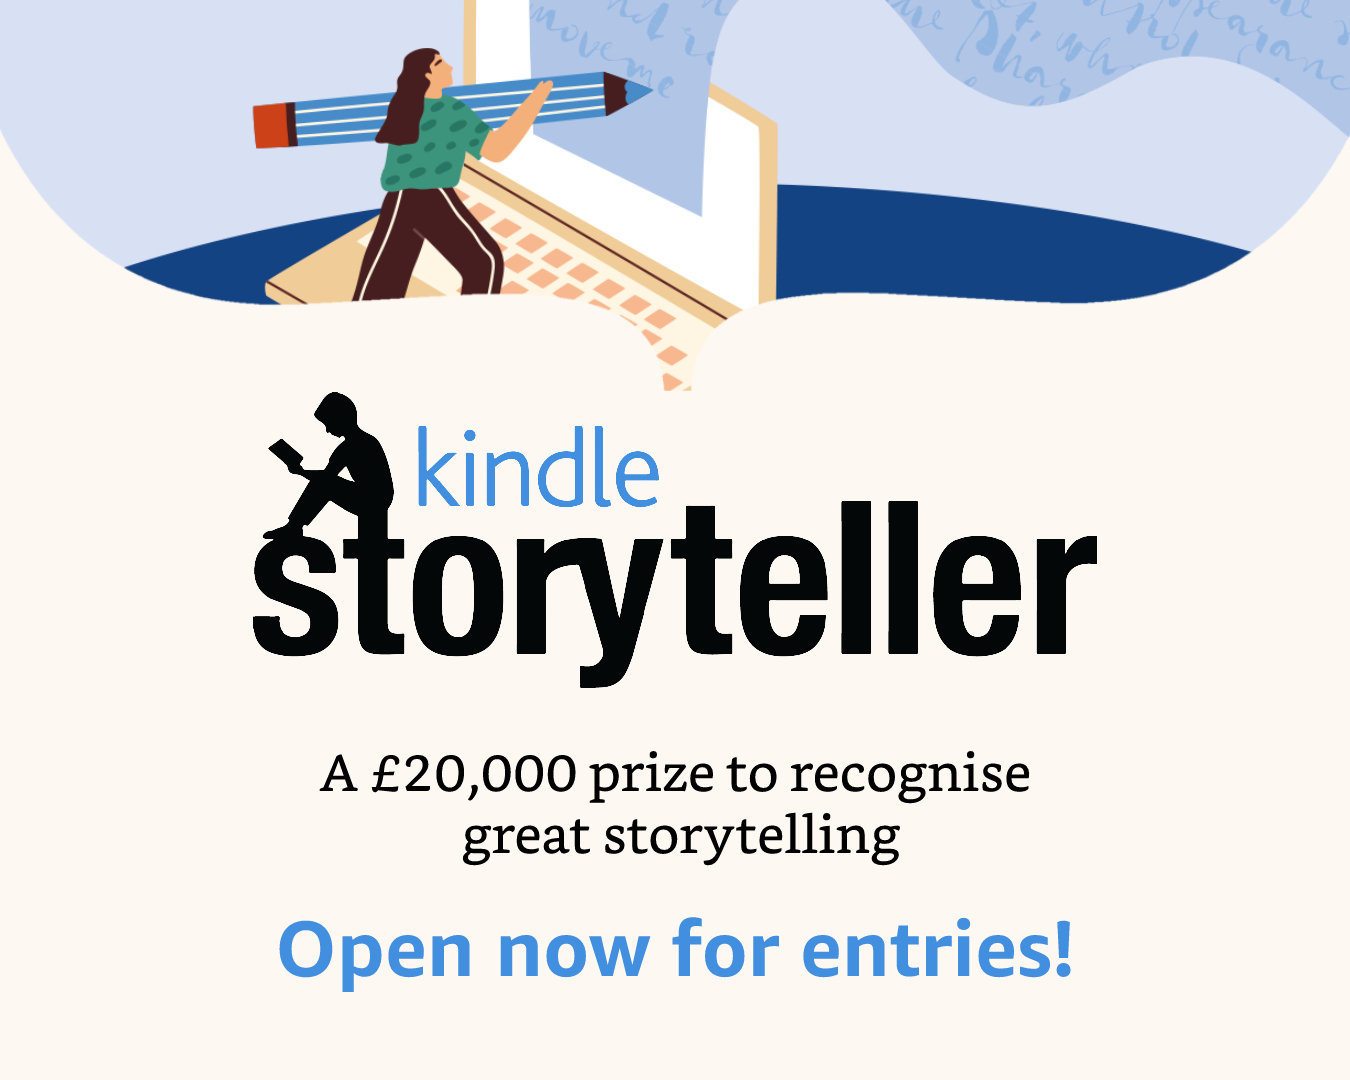 The Kindle Storyteller Award